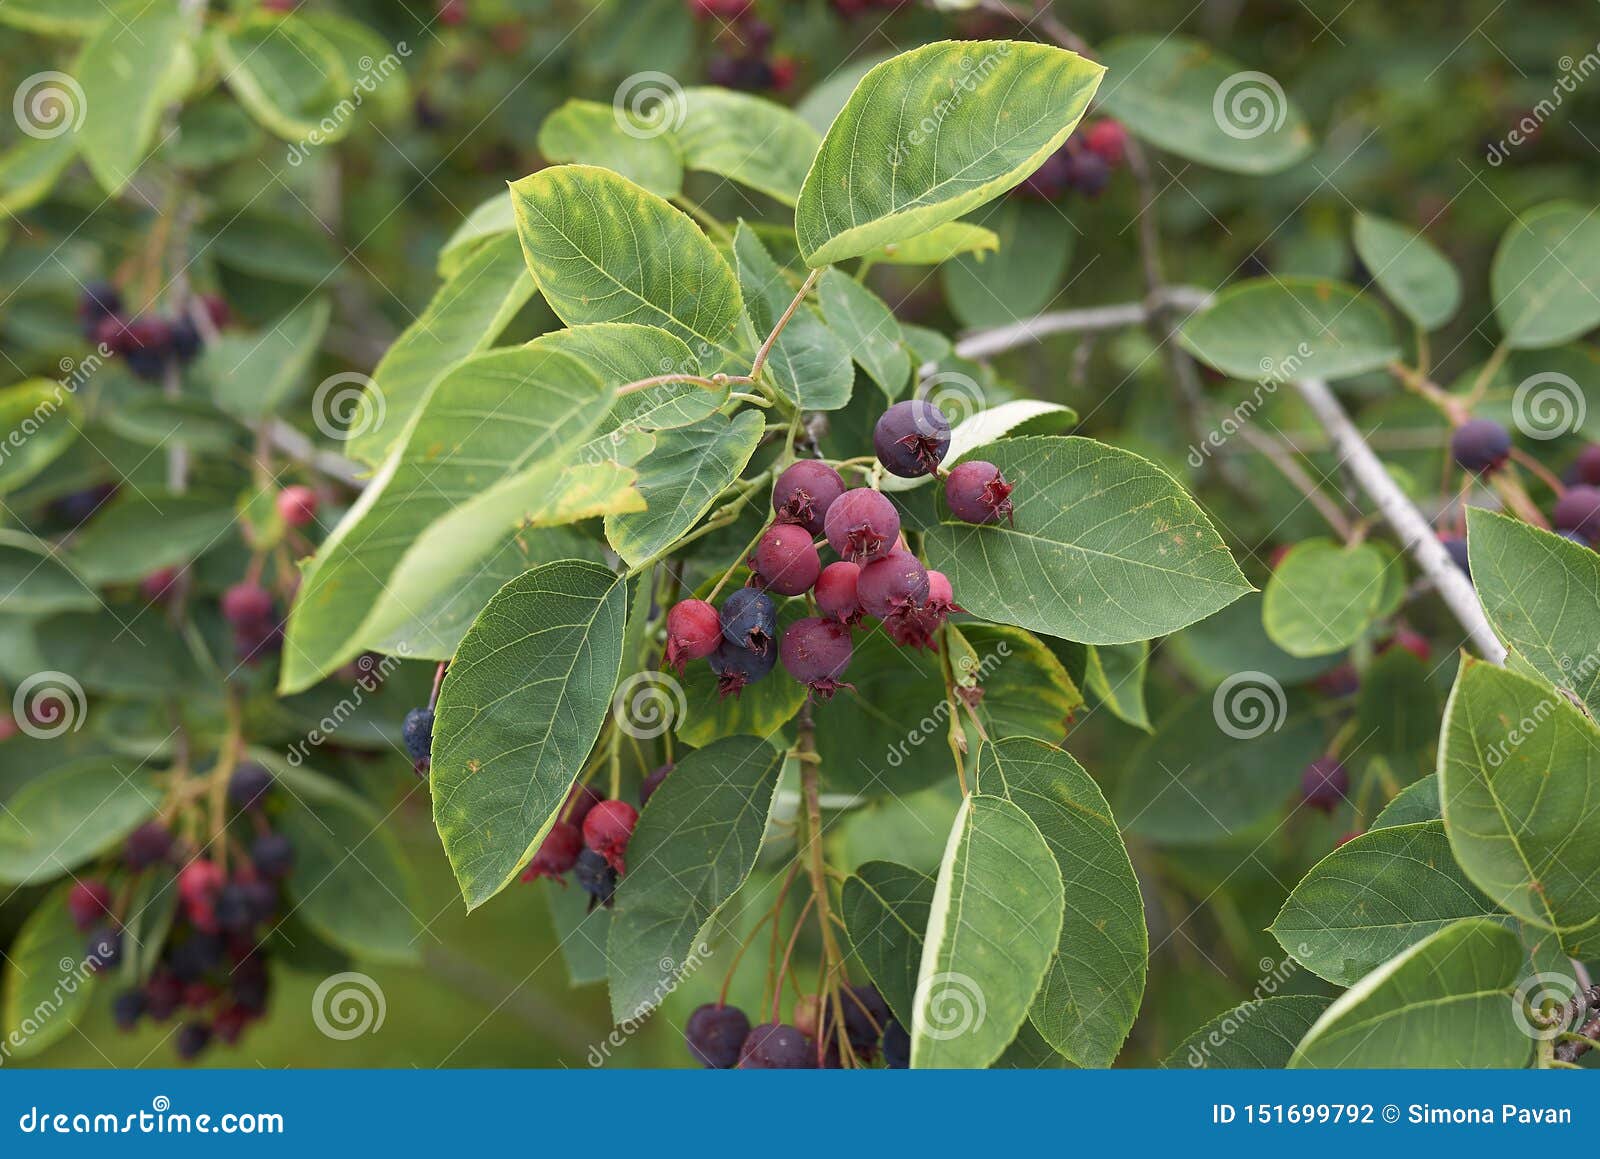 amelanchier canadensis fruit